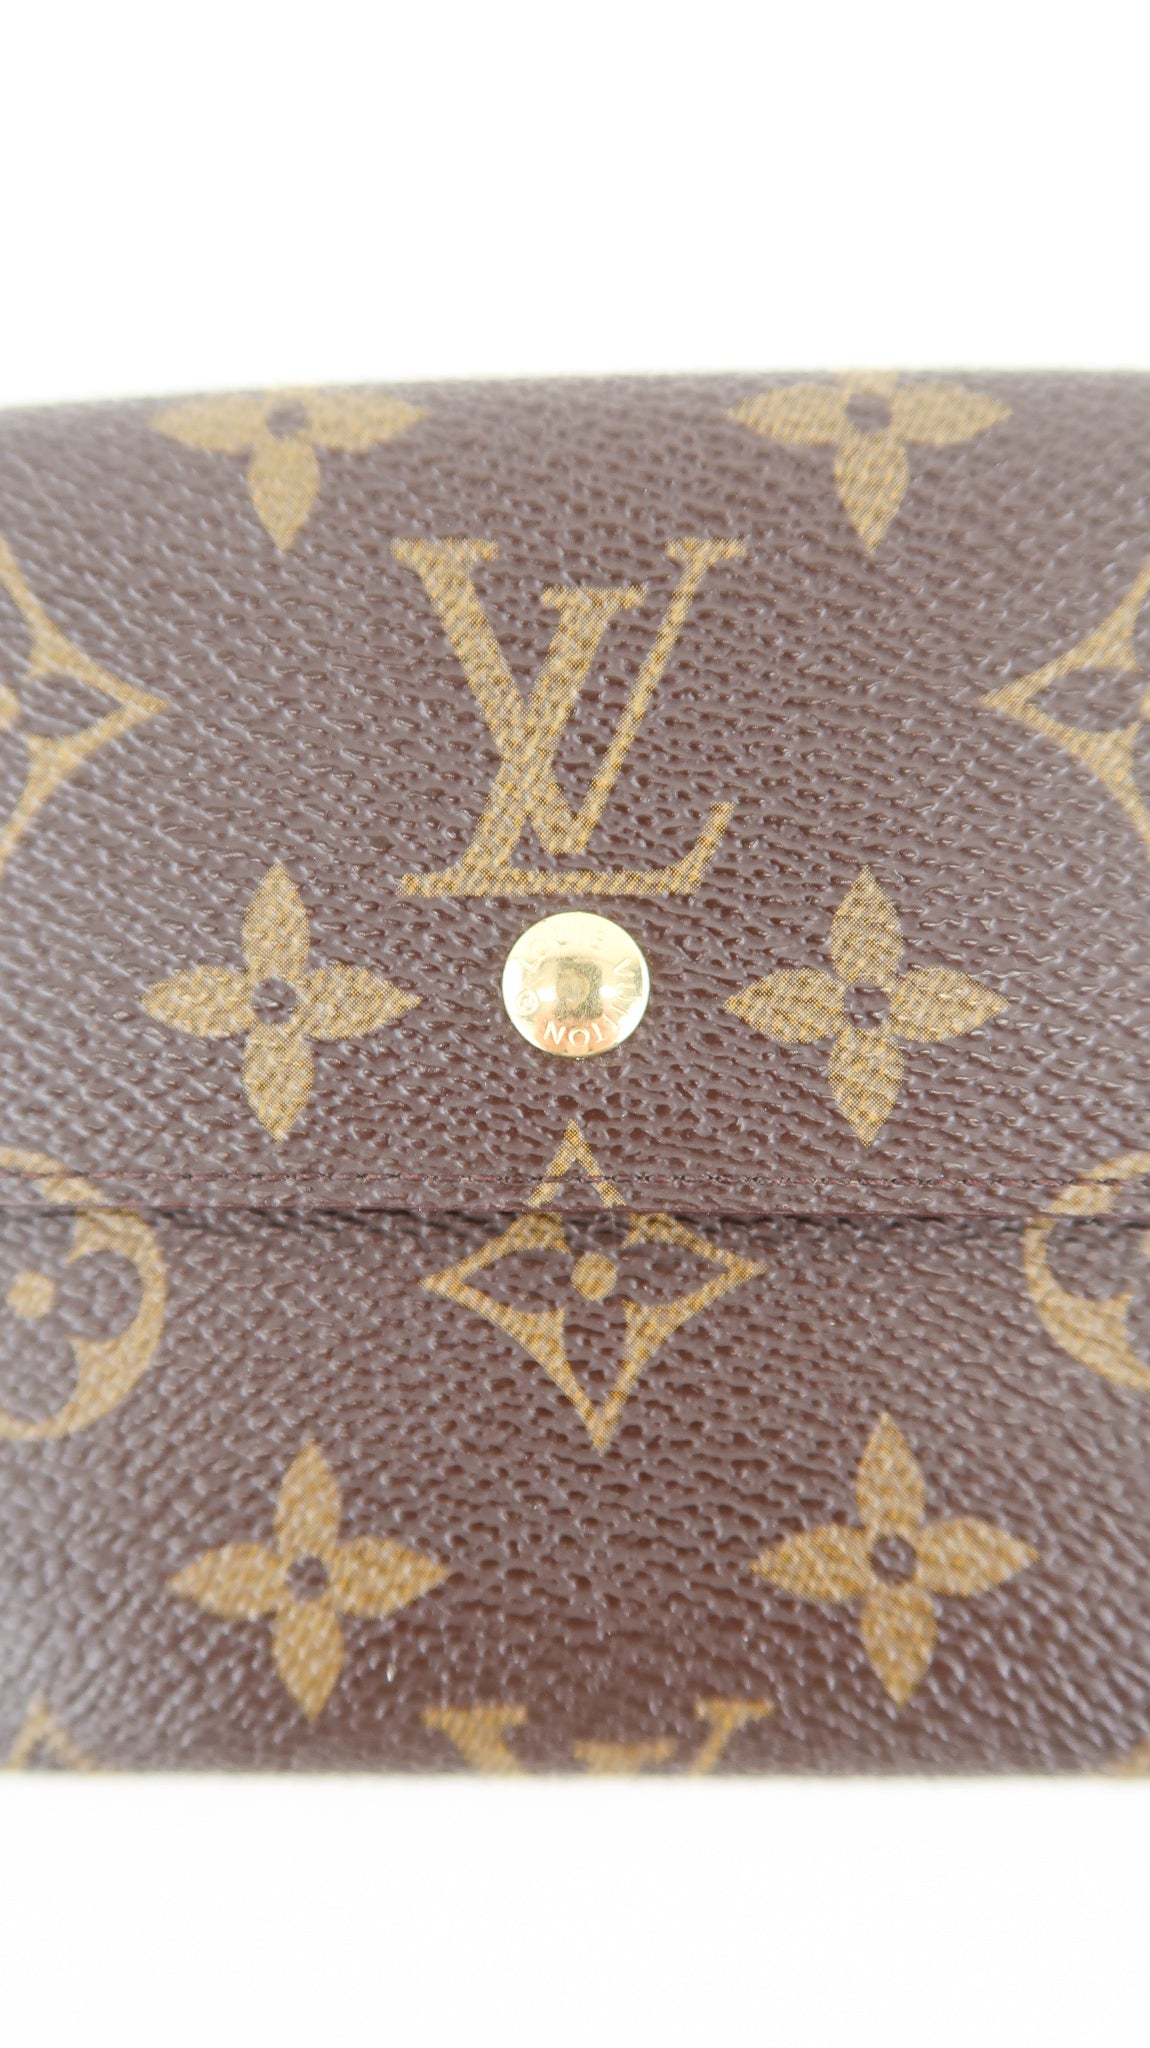 Louis Vuitton Monogram Elise Wallet Louis Vuitton